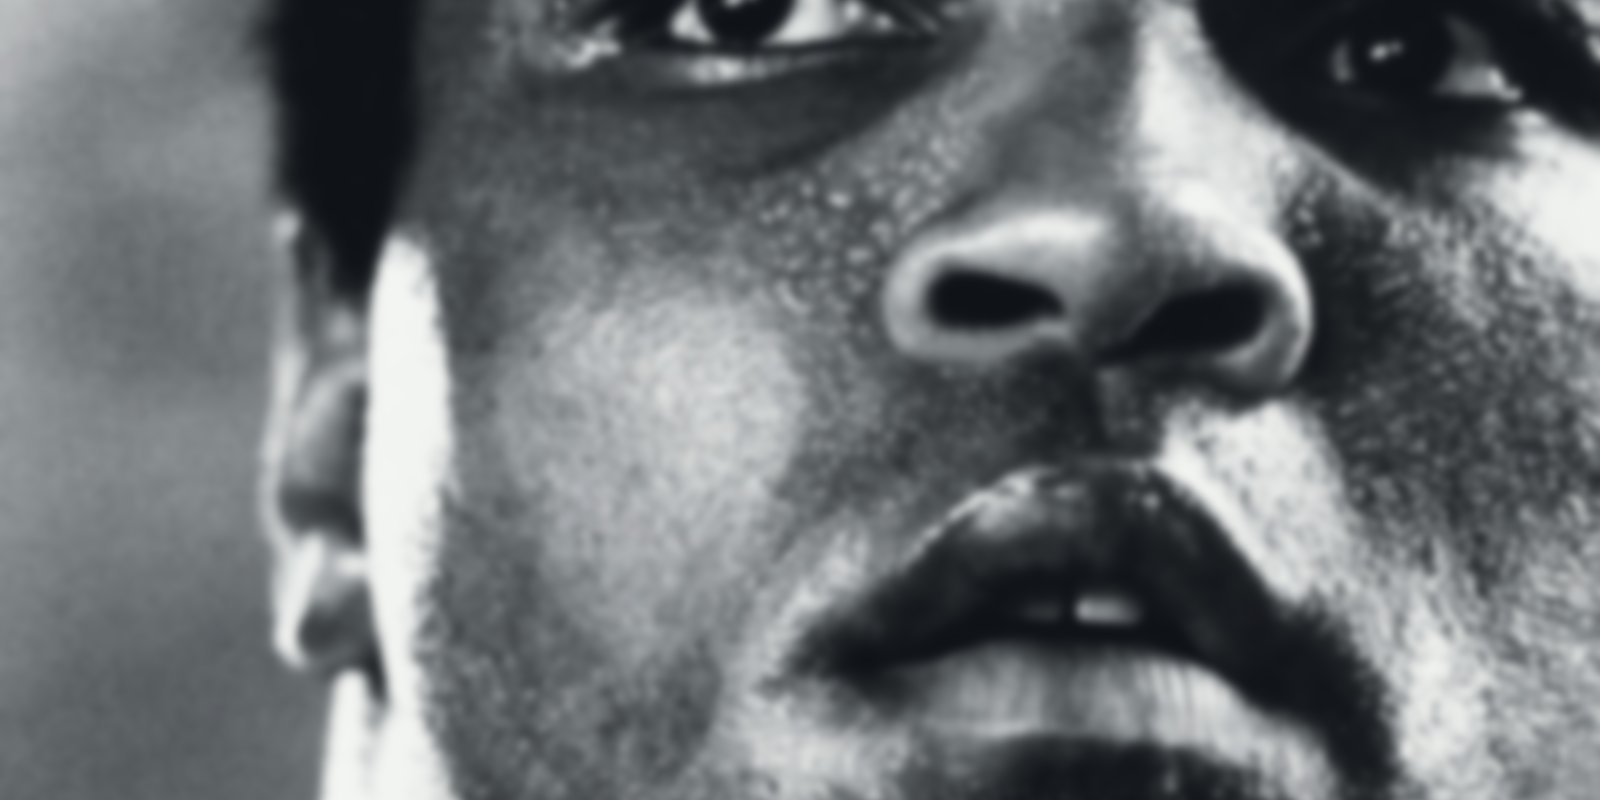 Muhammad Ali - Through the Eyes of the World